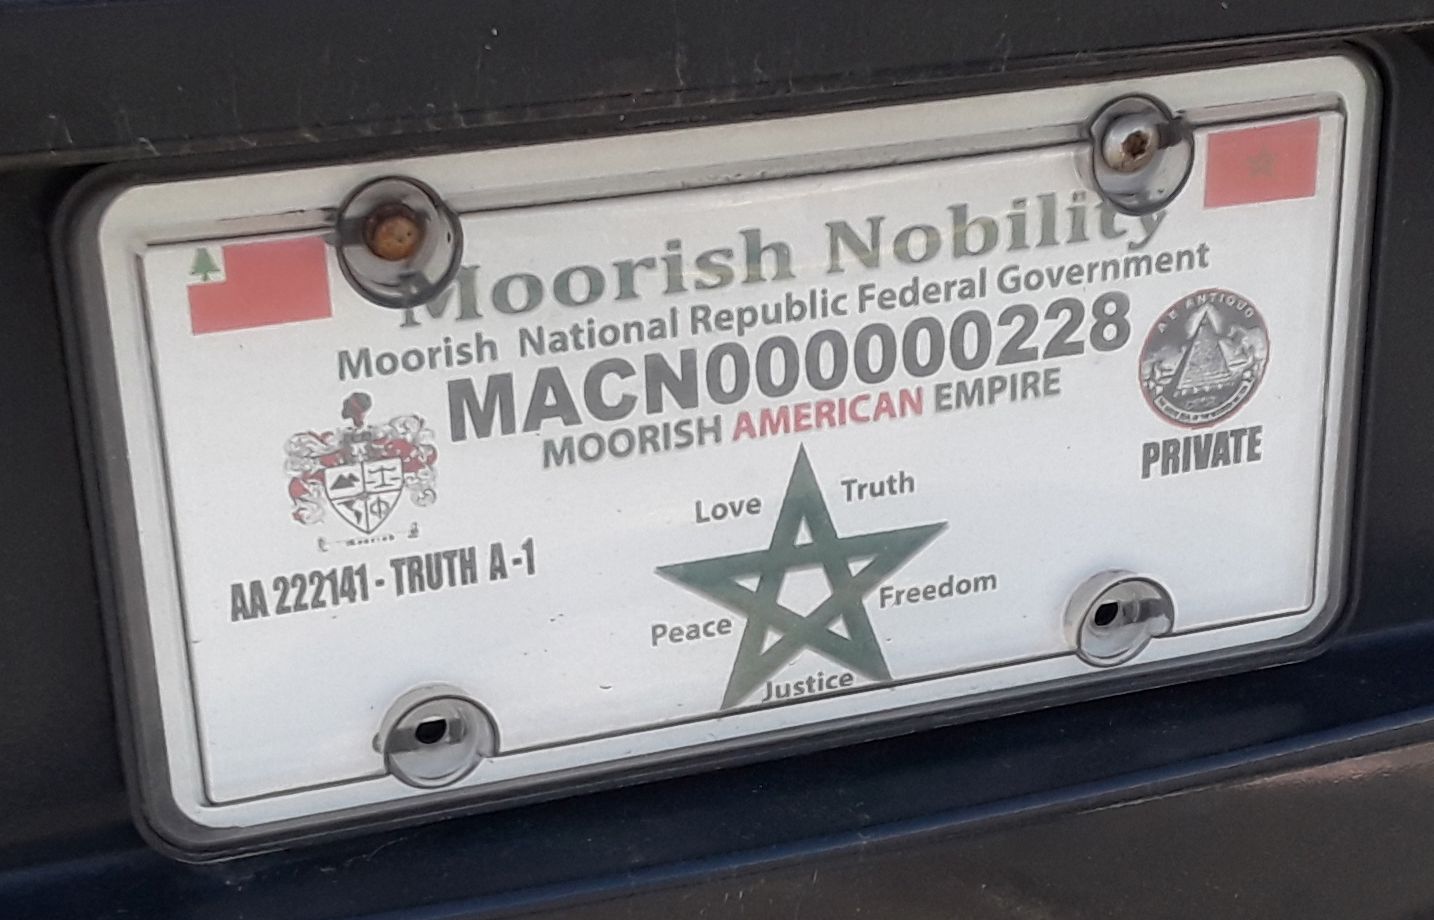 Moorish Sovereign Citizen’s license plate